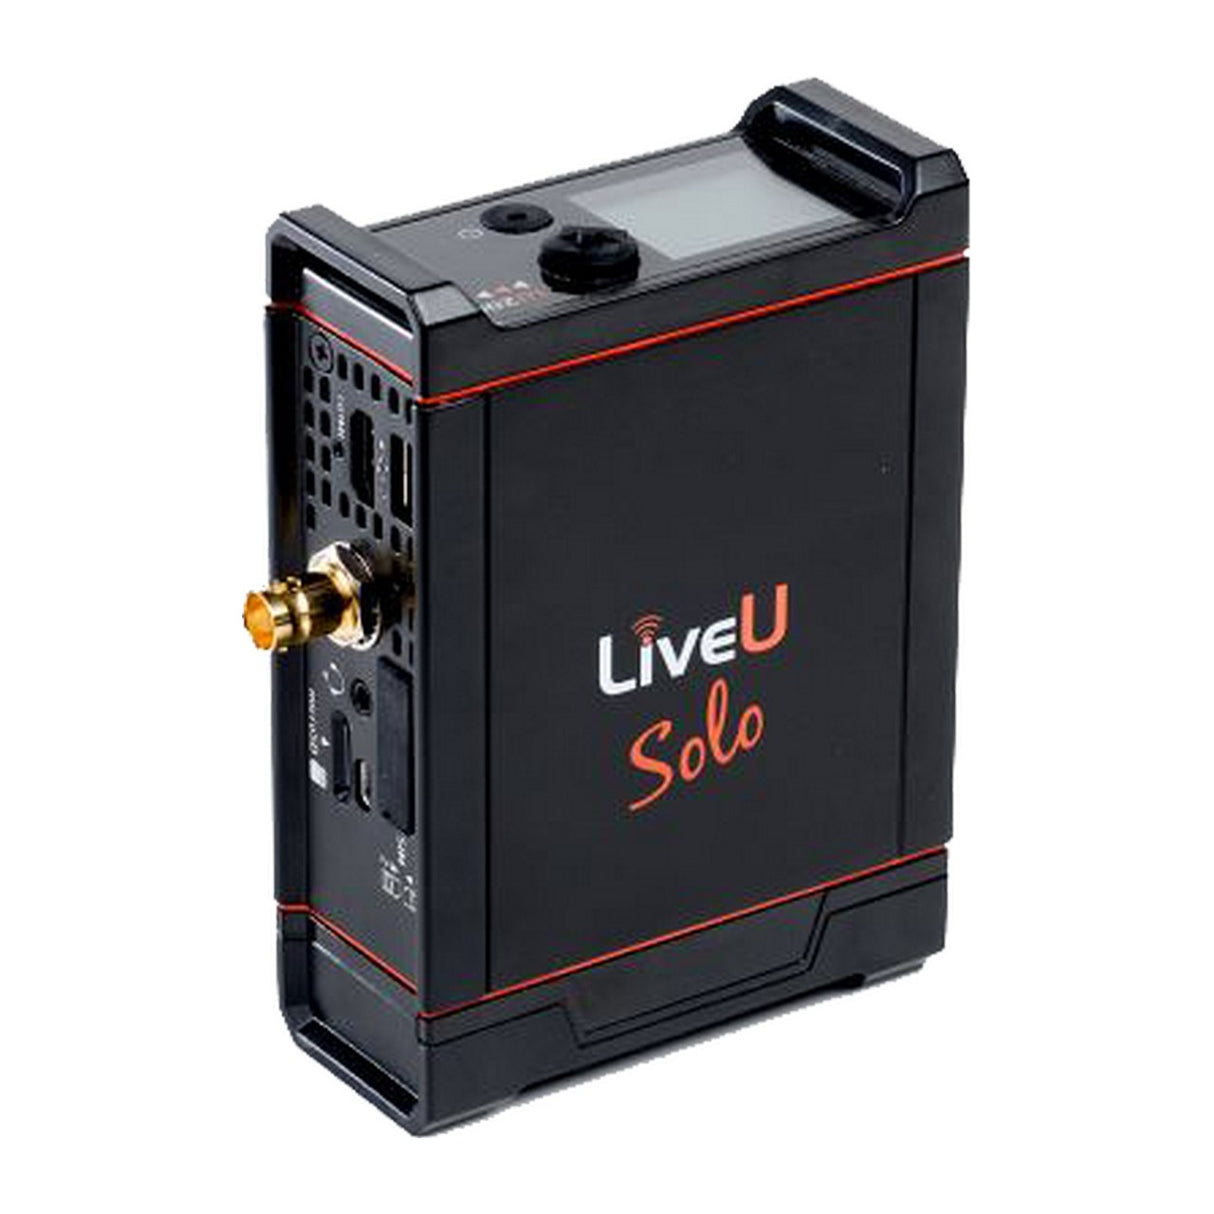 LiveU Solo | Live Streaming Video Encoder Bundle with 1 Year LRT Virtual Cloud Server